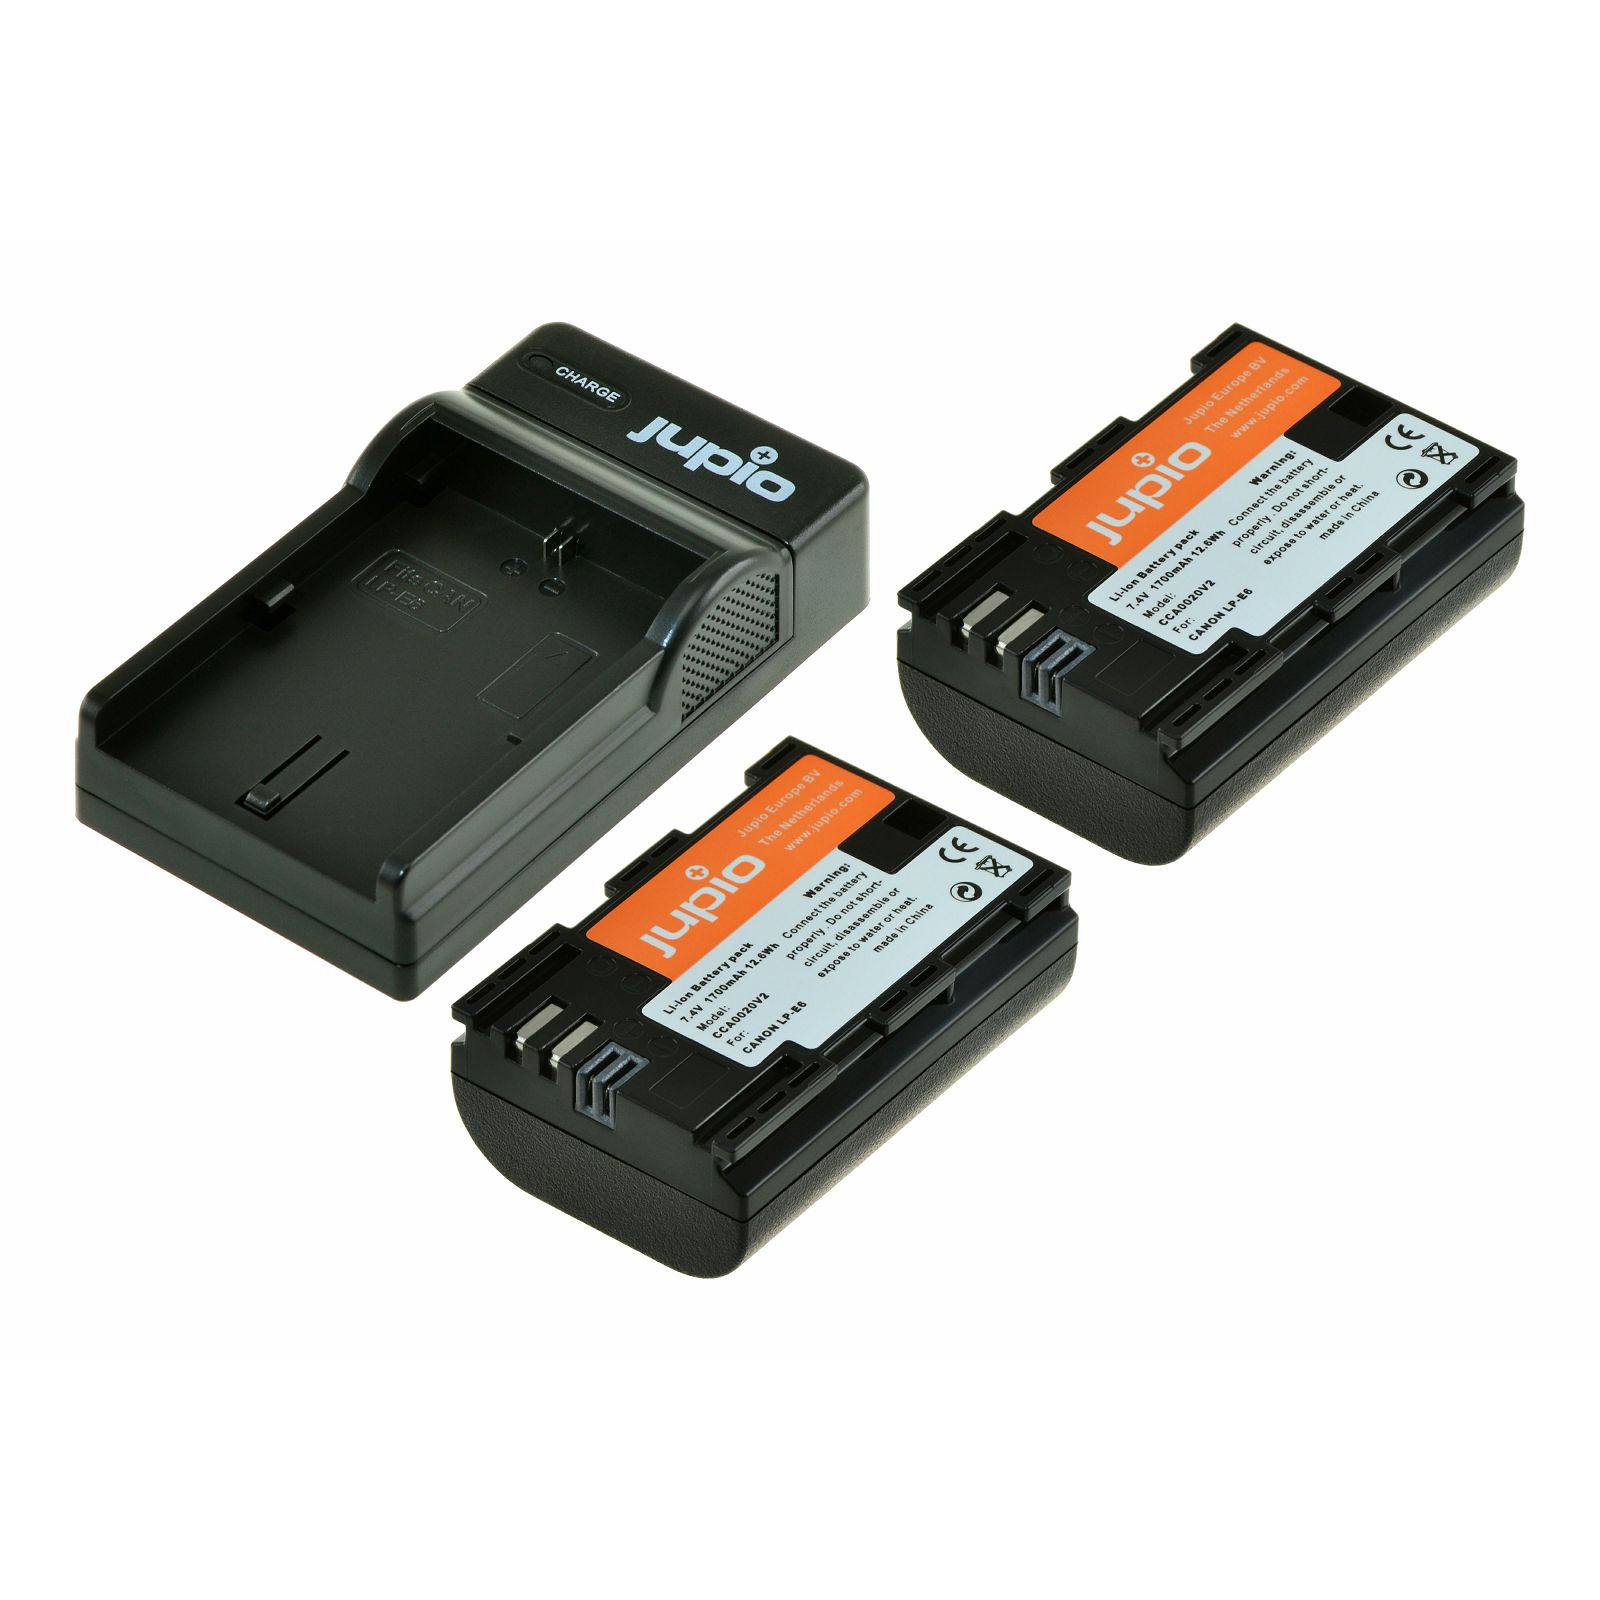 Jupio KIT 2x Battery LP-E6 1700mAh + USB Single Charger komplet punjač i dvije baterije za Canon 5D IV, 5D III, 7D II, 80D, 70D, 6D, 60D CCA1000